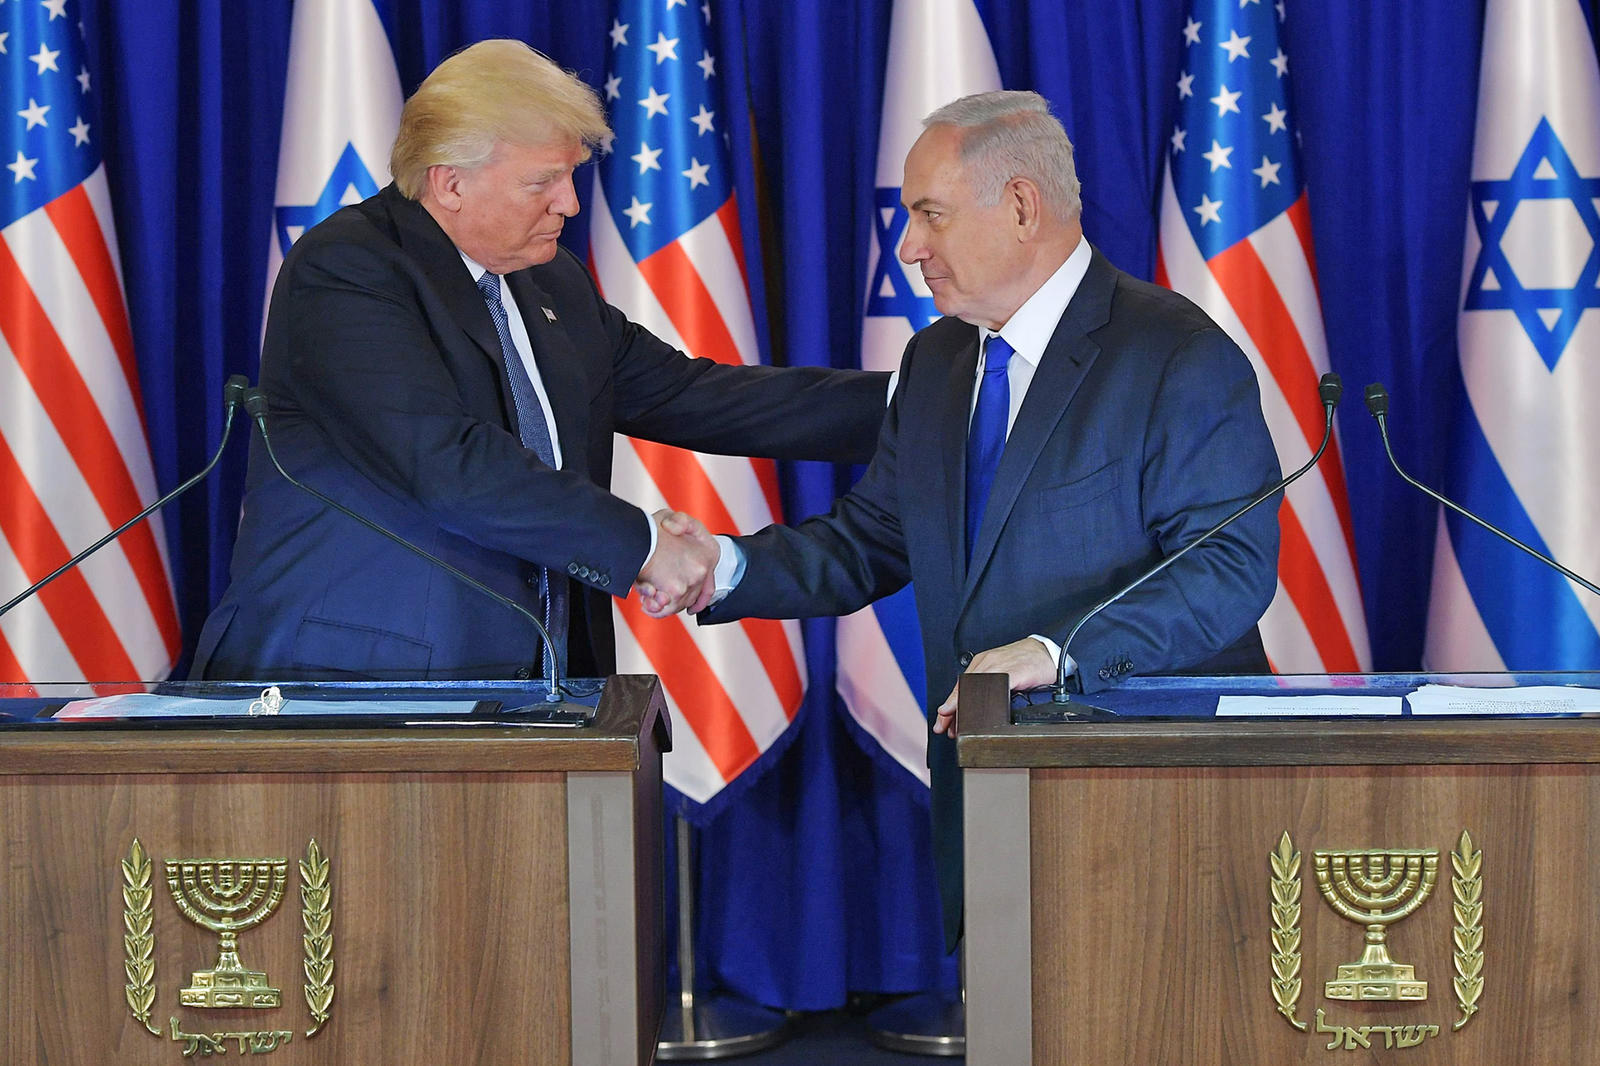 US President Donald Trump (L) and Israel's Prime Minister Benjamin Netanyahu shake hands after delivering press statements before an official diner in Jerusalem on May 22, 2017. / AFP PHOTO / MANDEL NGANMANDEL NGAN/AFP/Getty Images